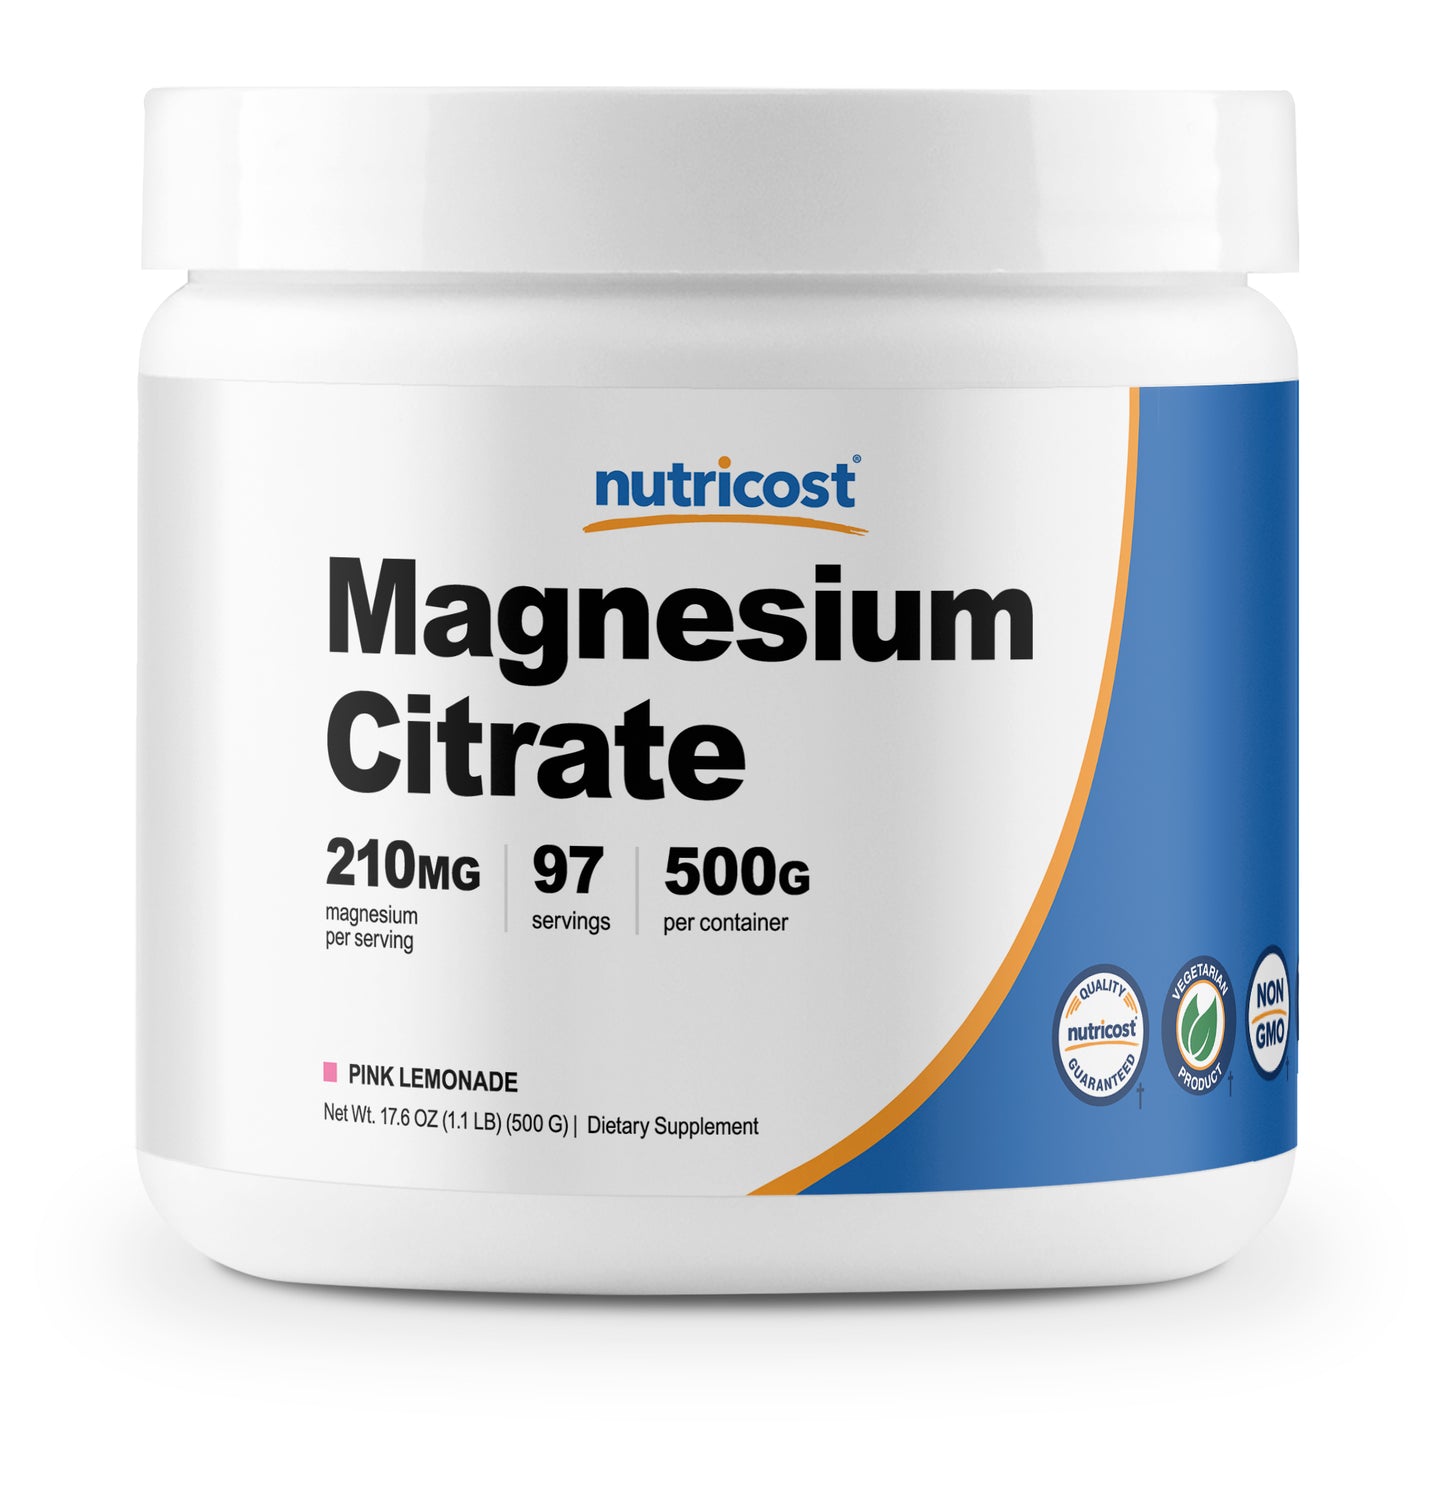 Nutricost Magnesium Citrate Powder